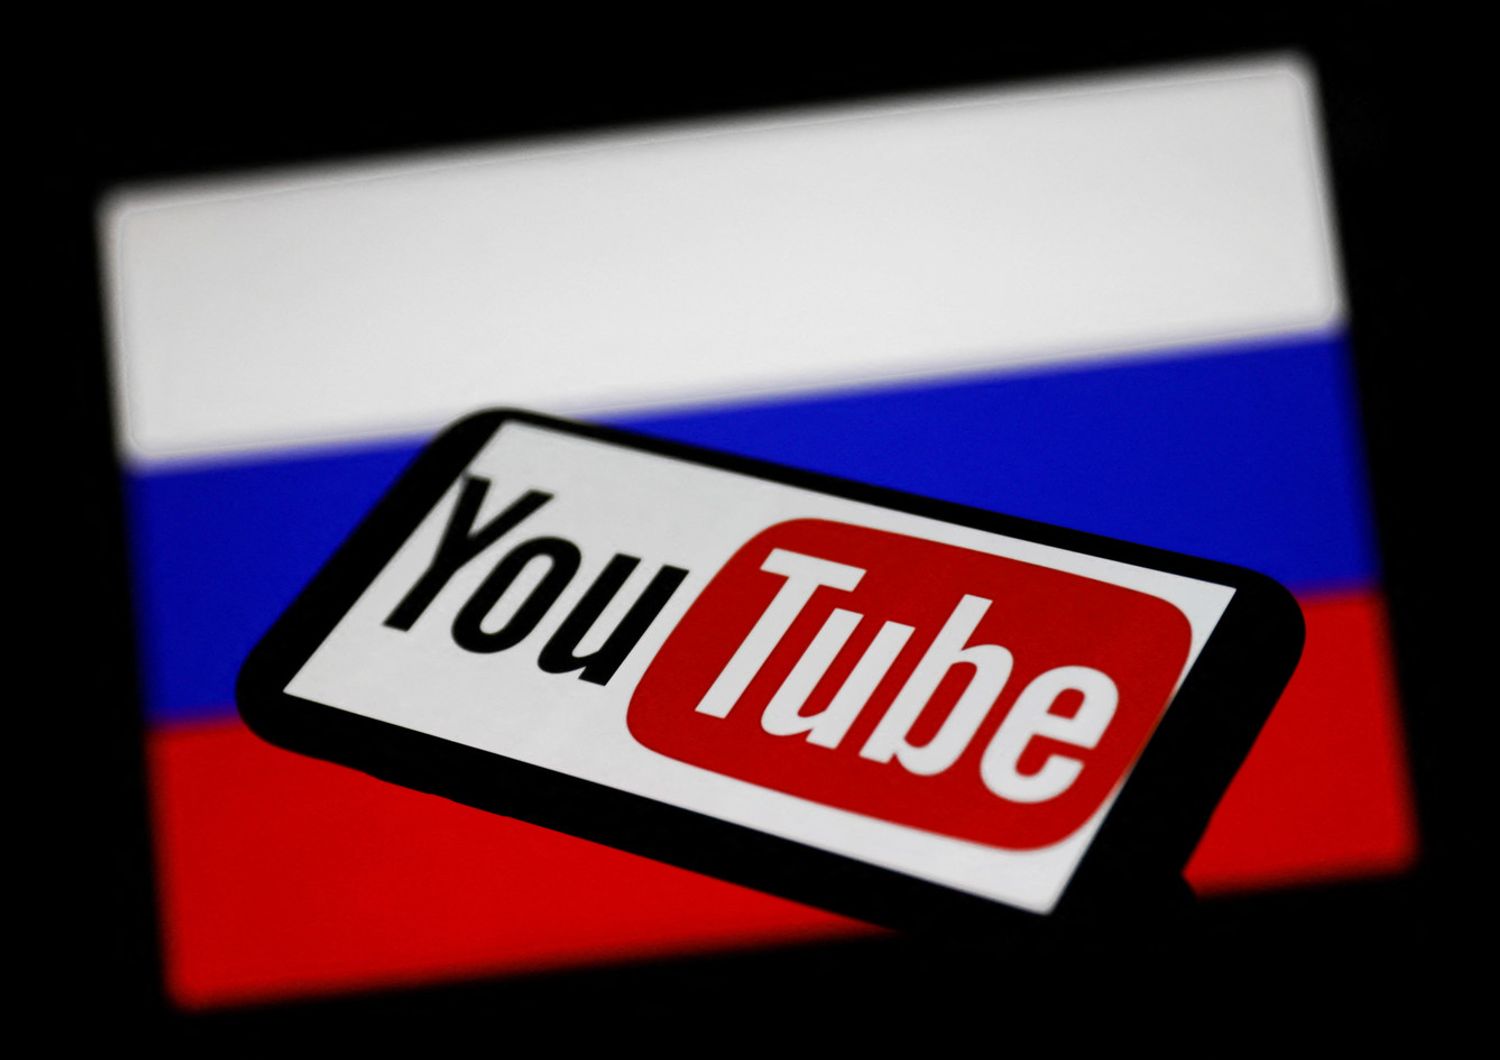 Youtube in Russia&nbsp;